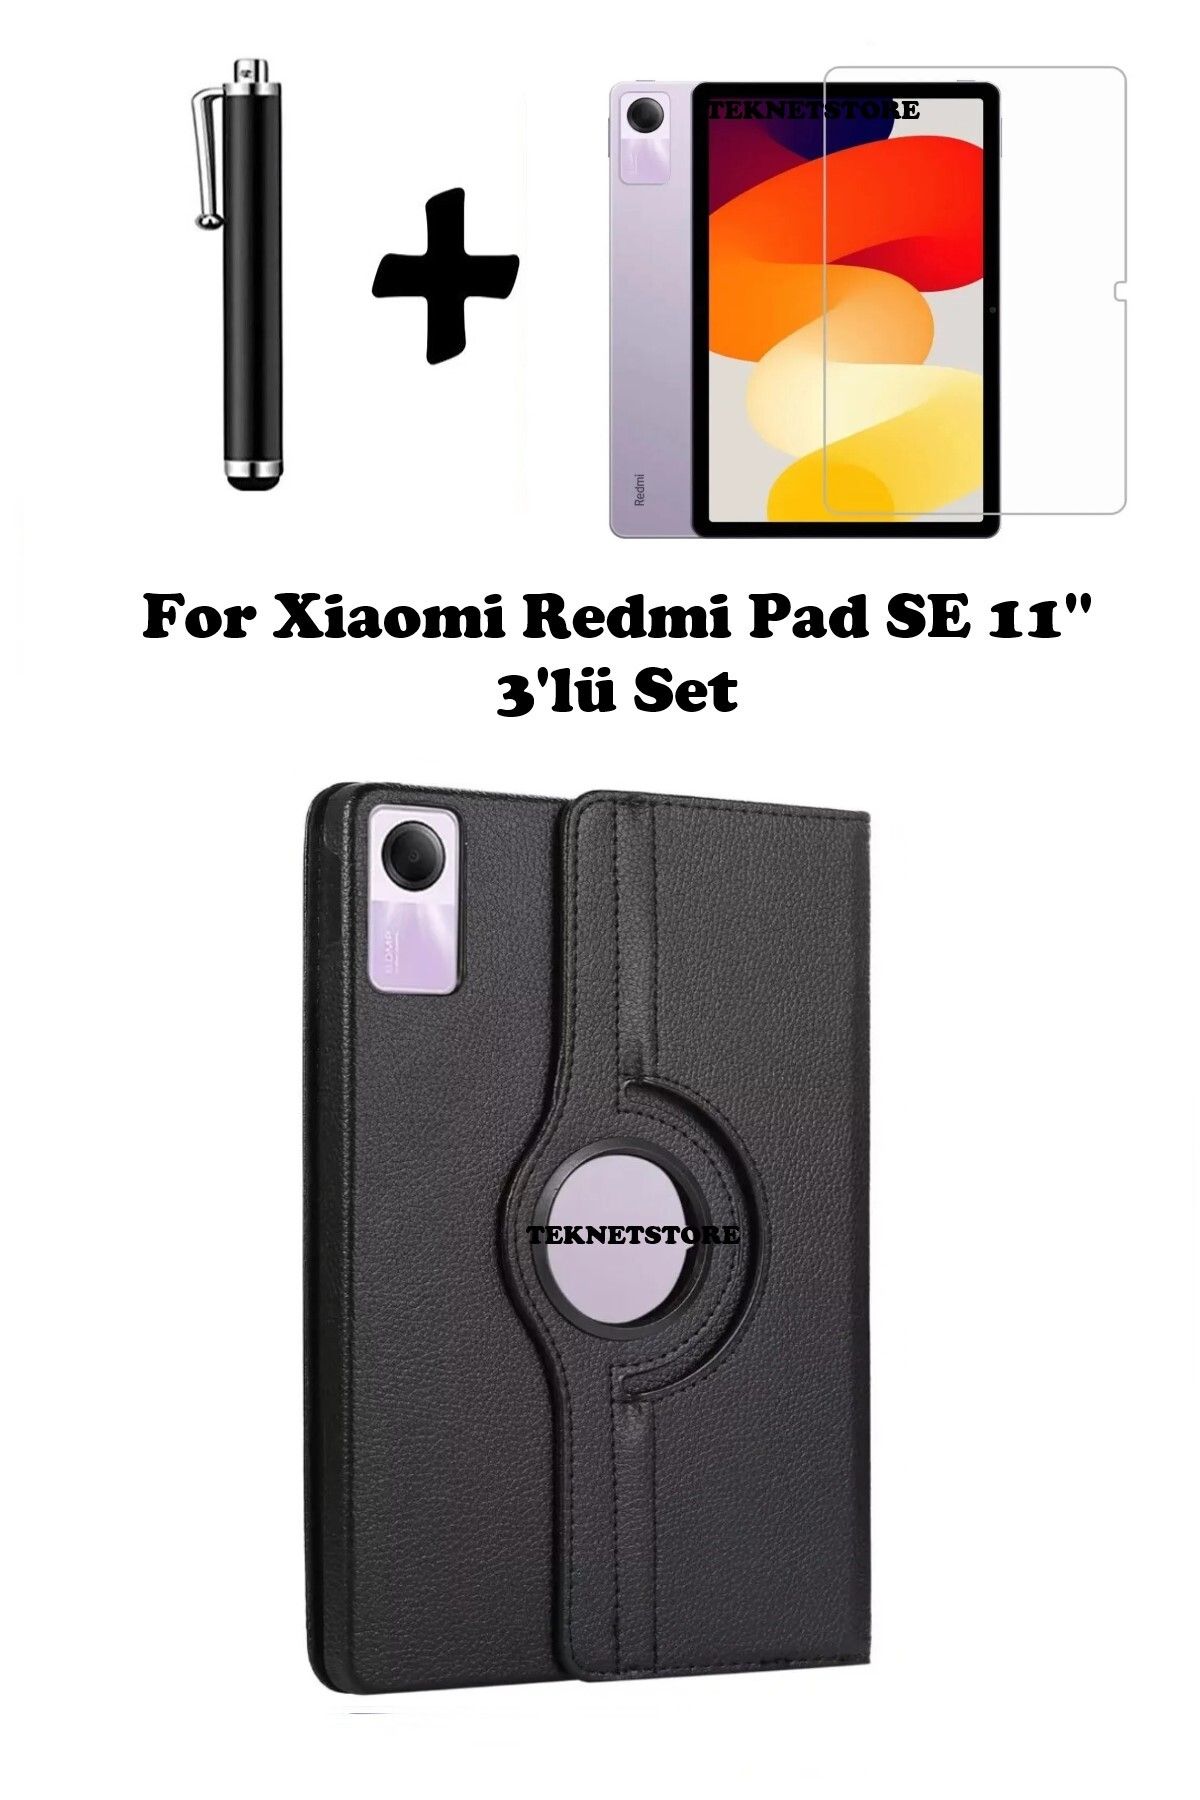 TEKNETSTORE Xiaomi Redmi Pad Se 11 Inç Tablet Uyumlu Uyku Modlu 360 Döner Pu Deri Kılıf Seti